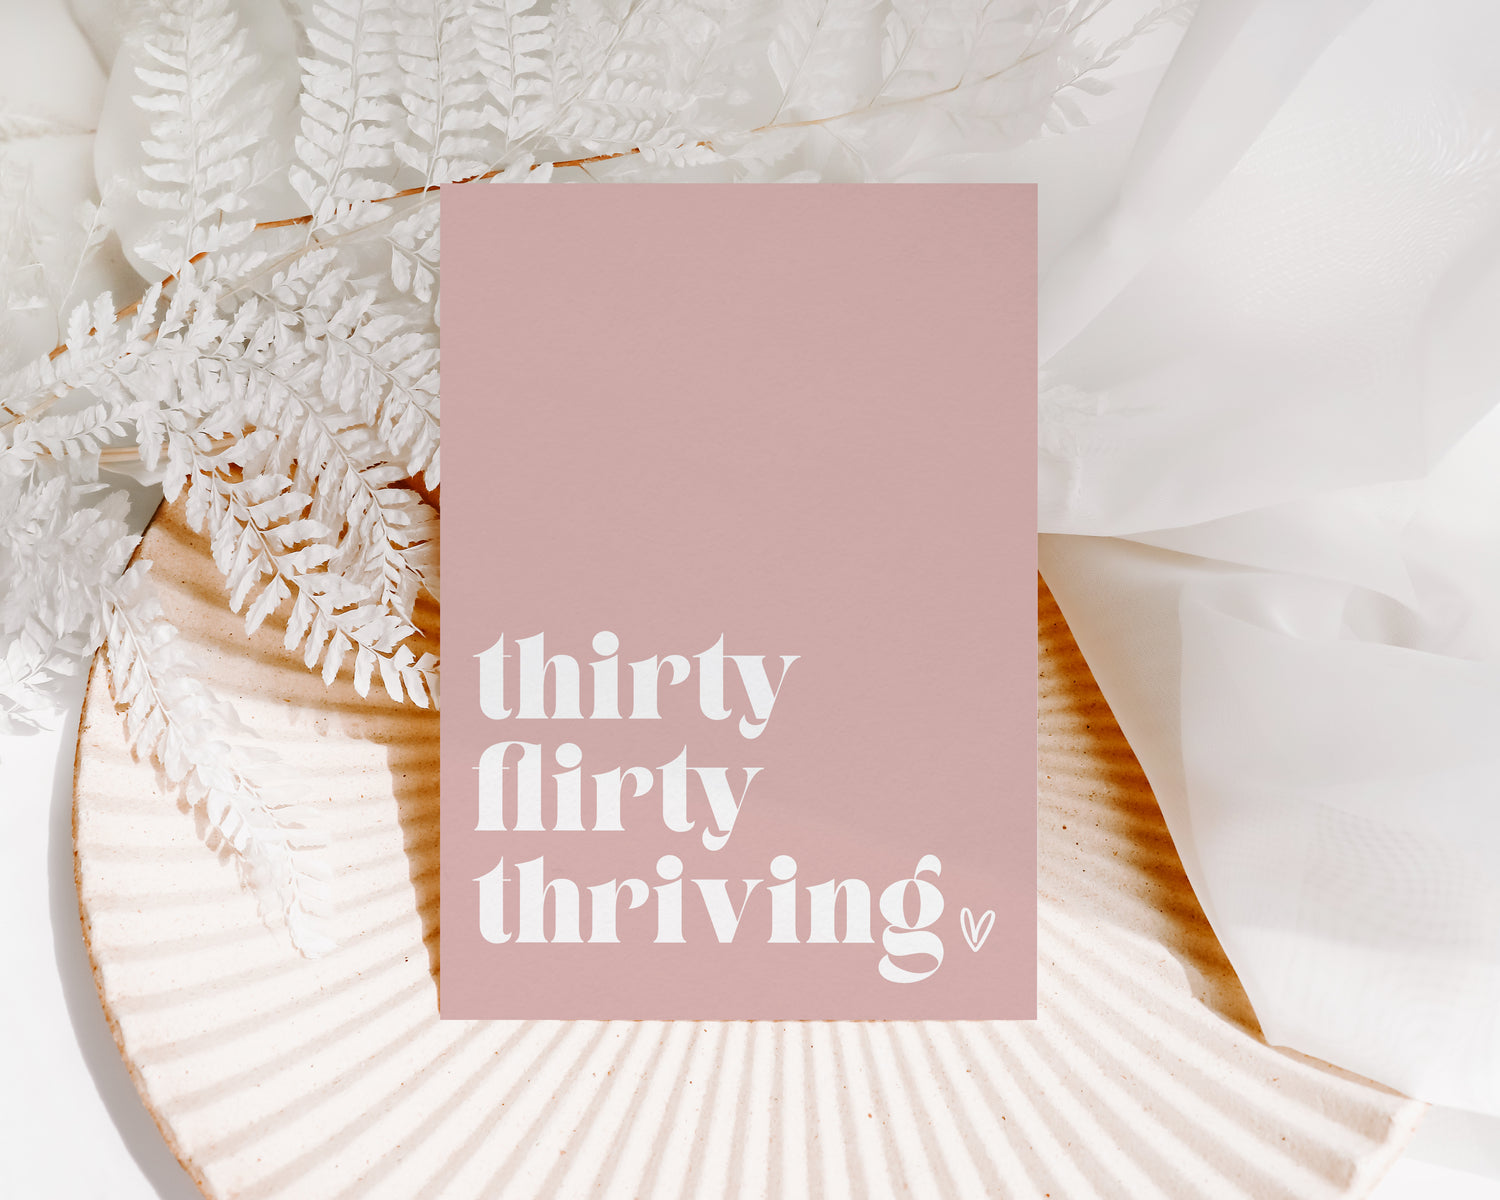 Thirty, Flirty, Thirving  - Creativien